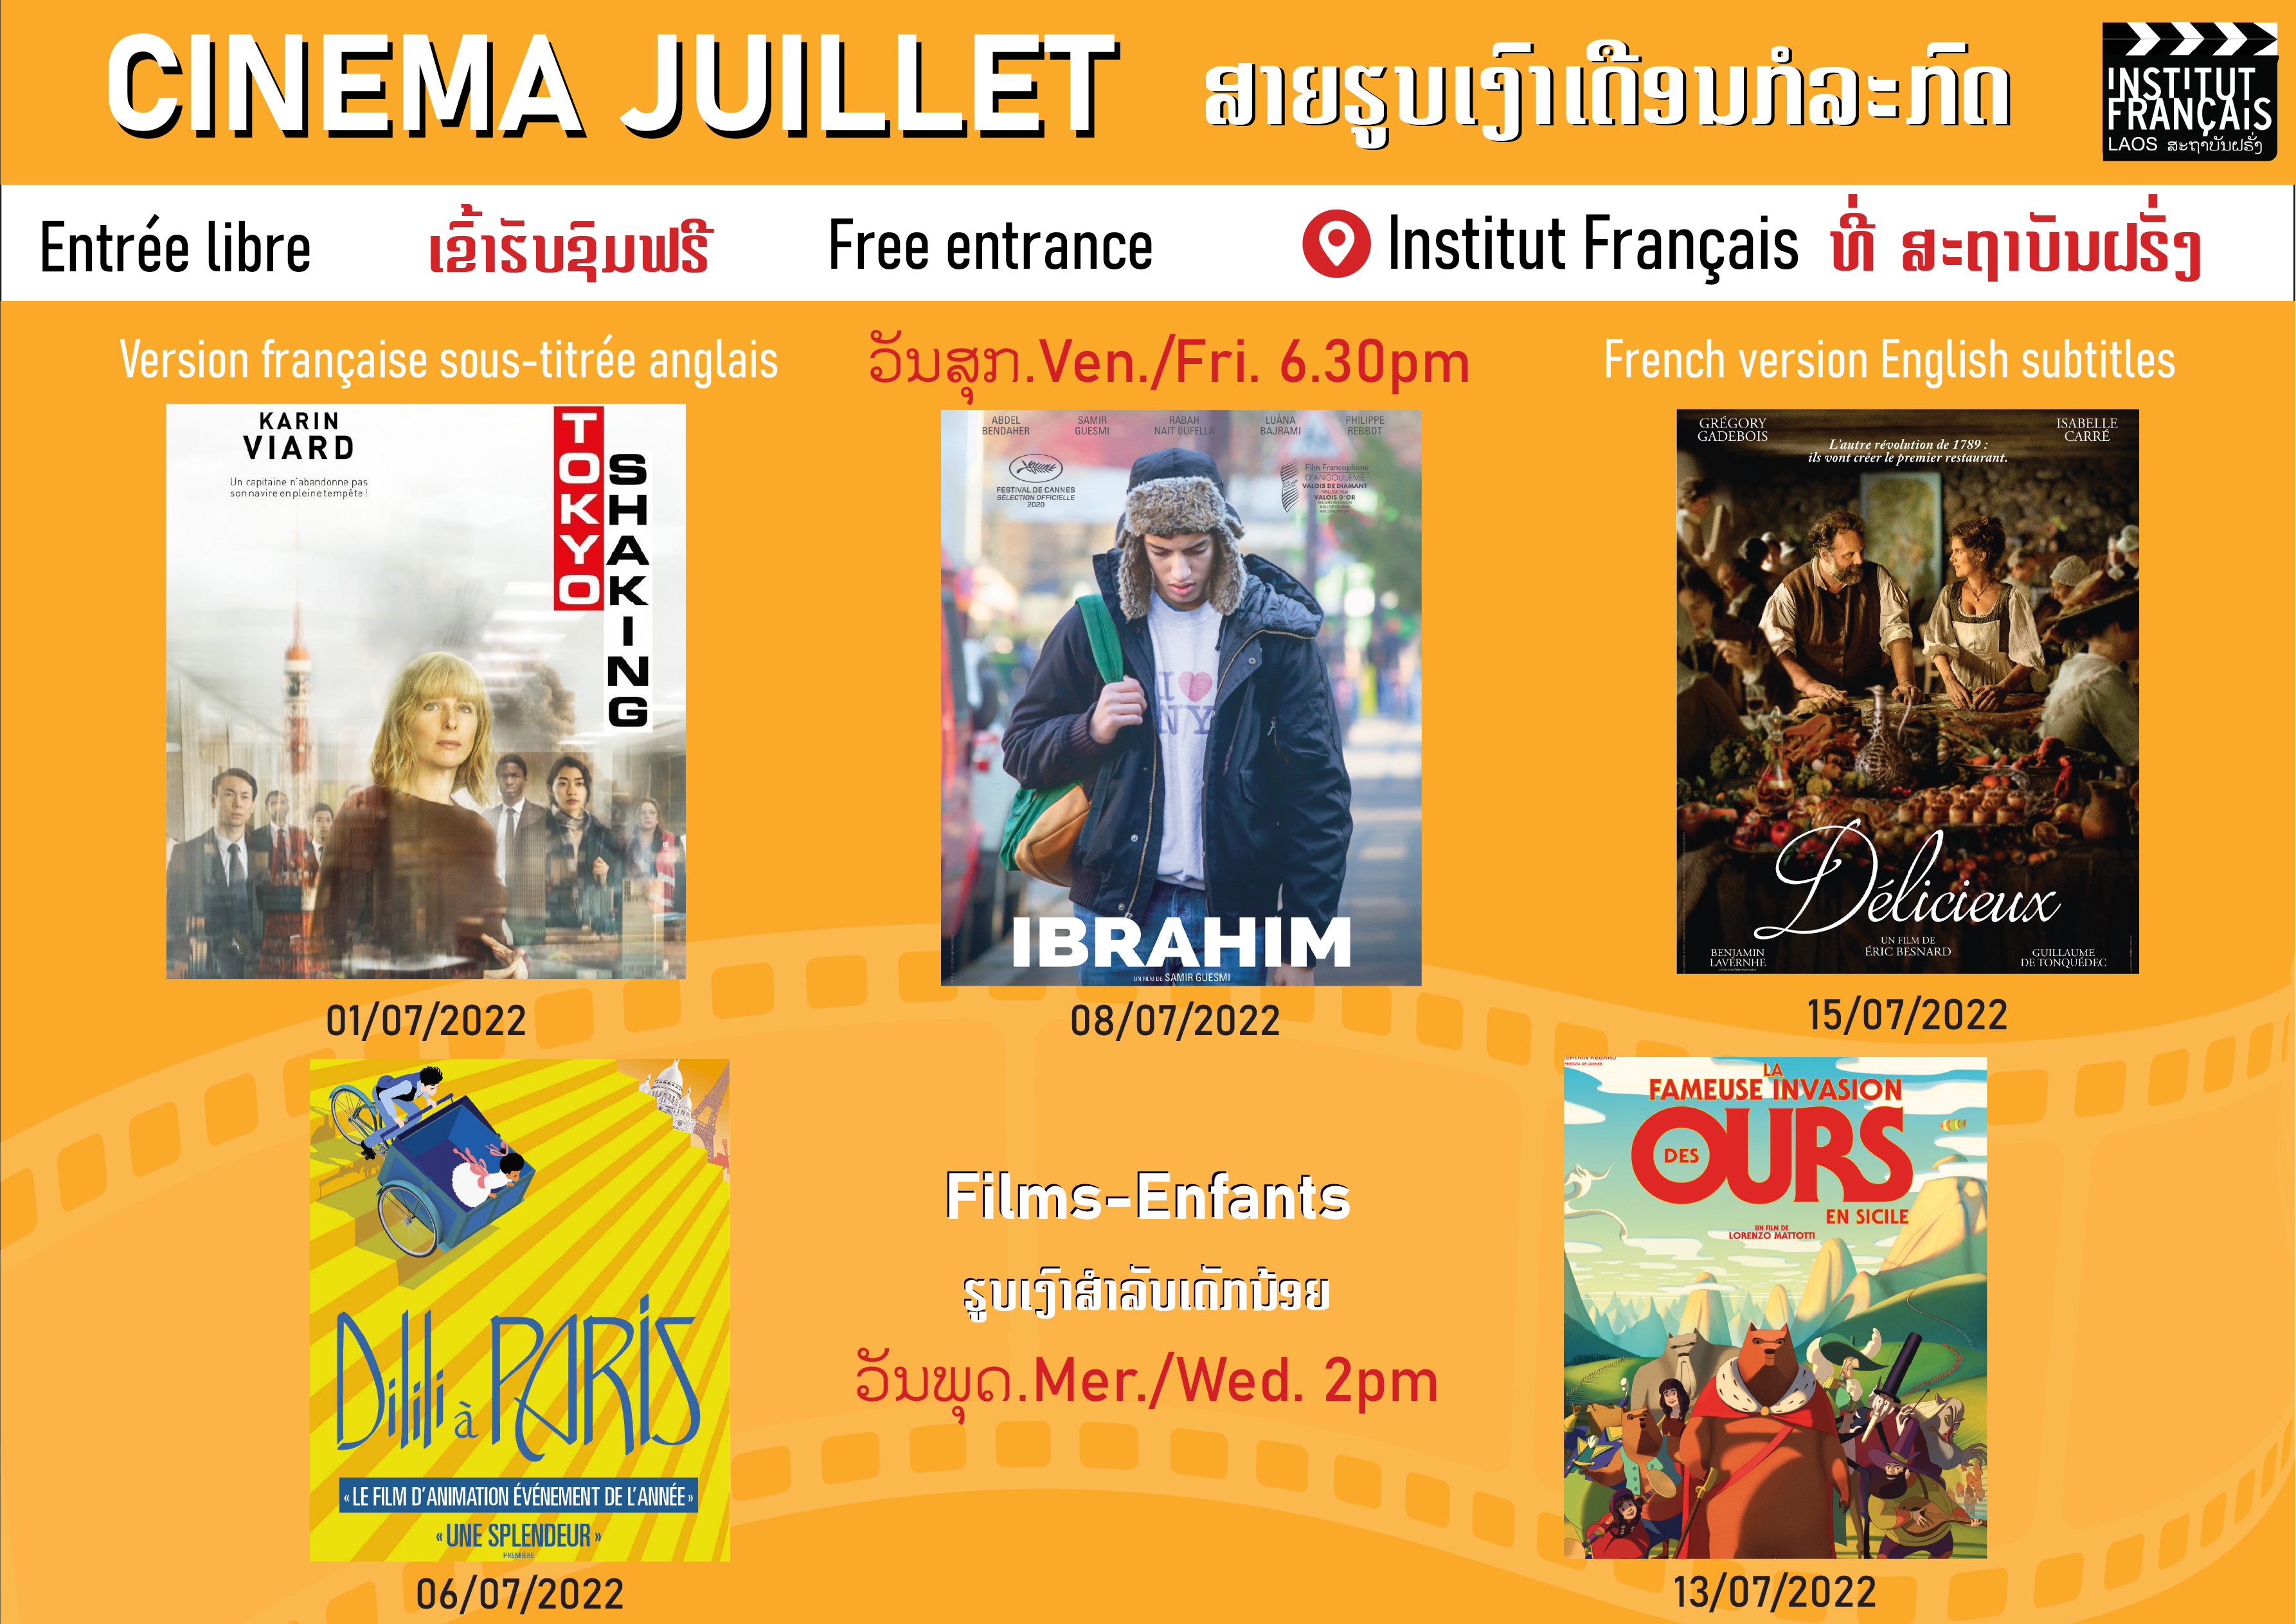 IFLCinema Film screenings. Agenda – July